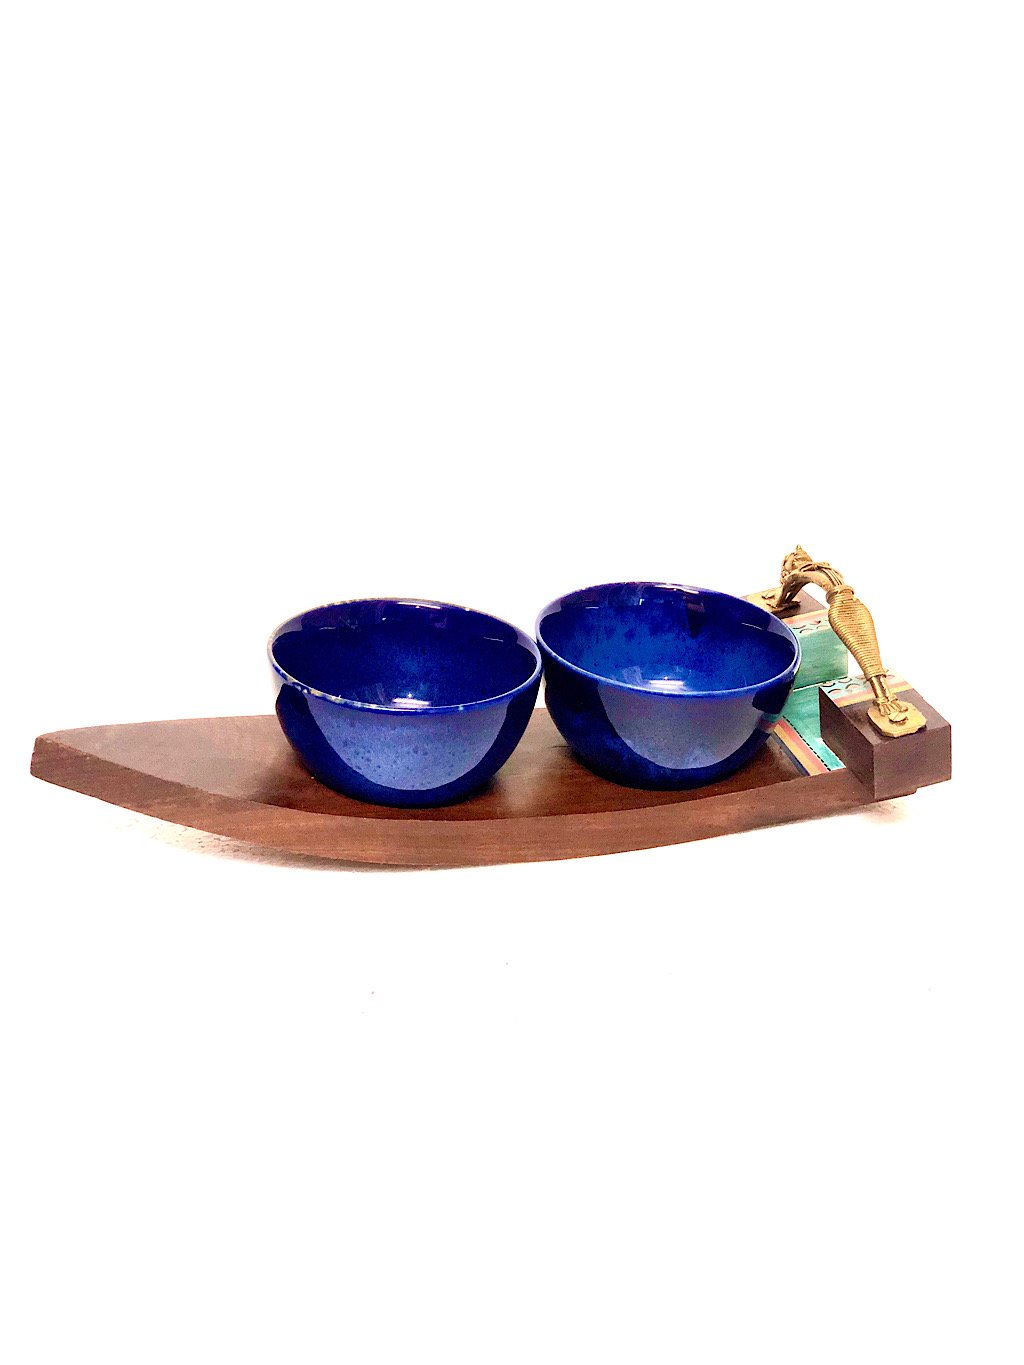 Unique Boat Shaped Wooden Tray & 2 Attractive Ceramic Bowls By Tamrapatra - Tanariri Hastakala